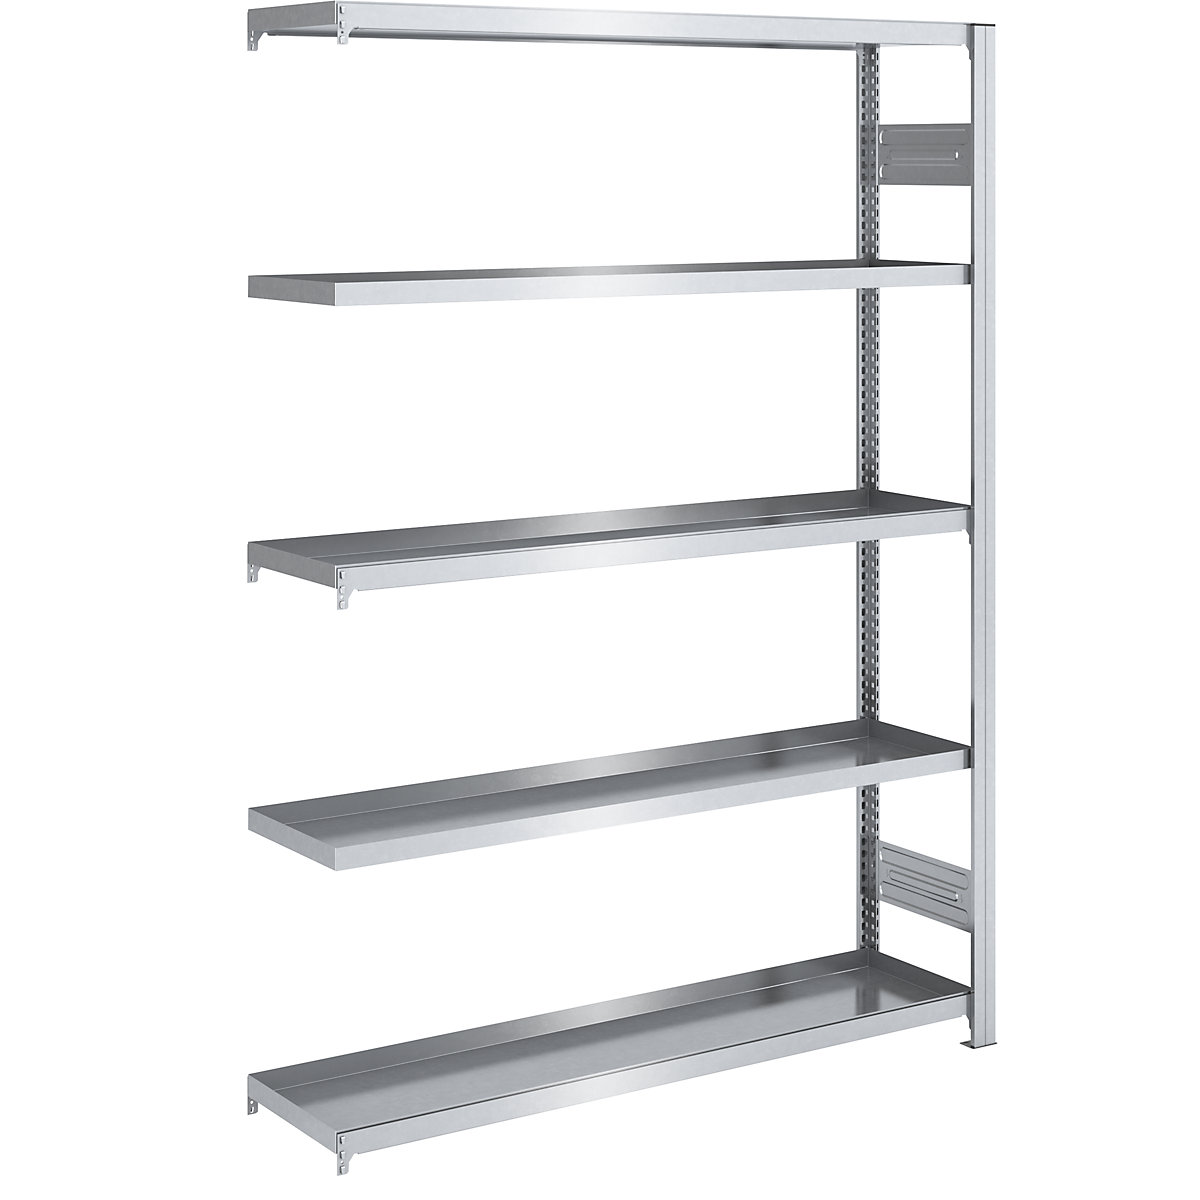 Tray shelf unit – hofe, shelf unit height 2000 mm, tray width 1300 mm, tray depth 400 mm, extension shelf unit